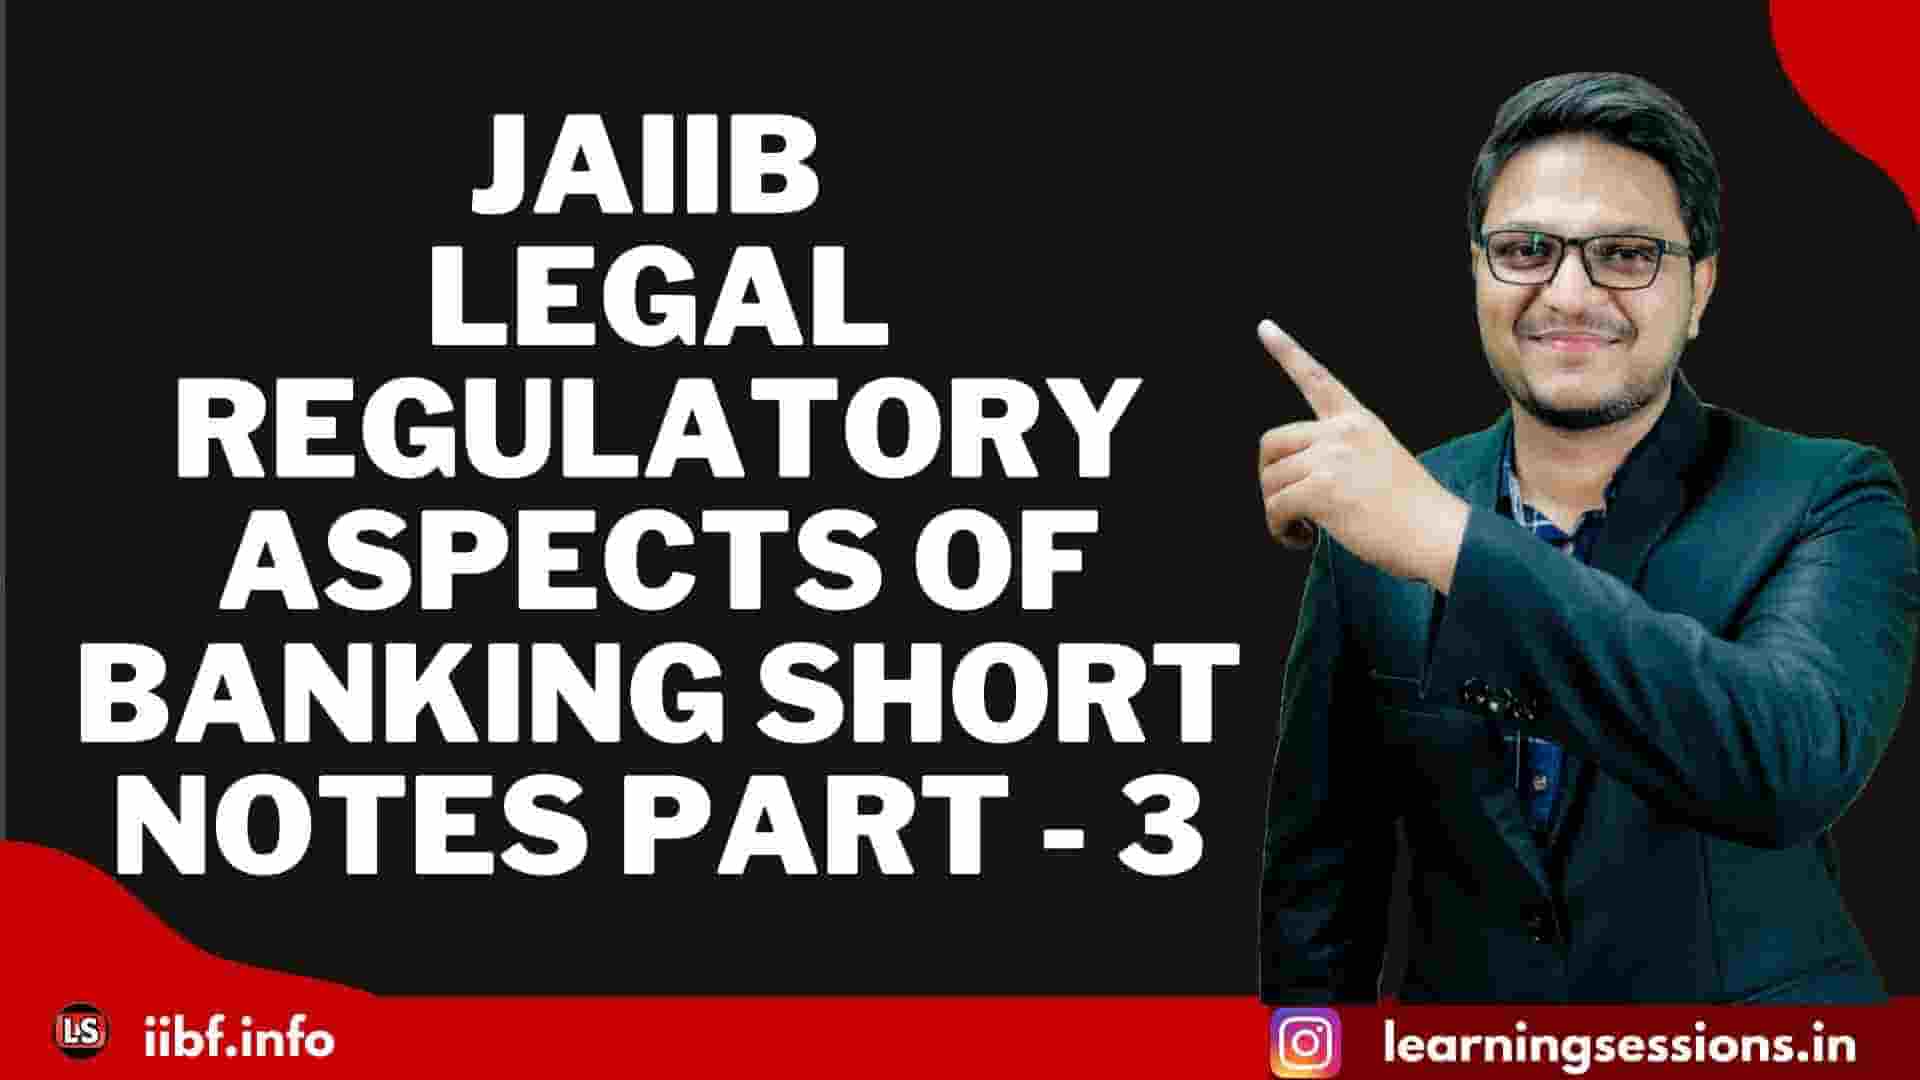 IIBF JAIIB Legal & Regulatory aspects of Banking Short Notes Part 3